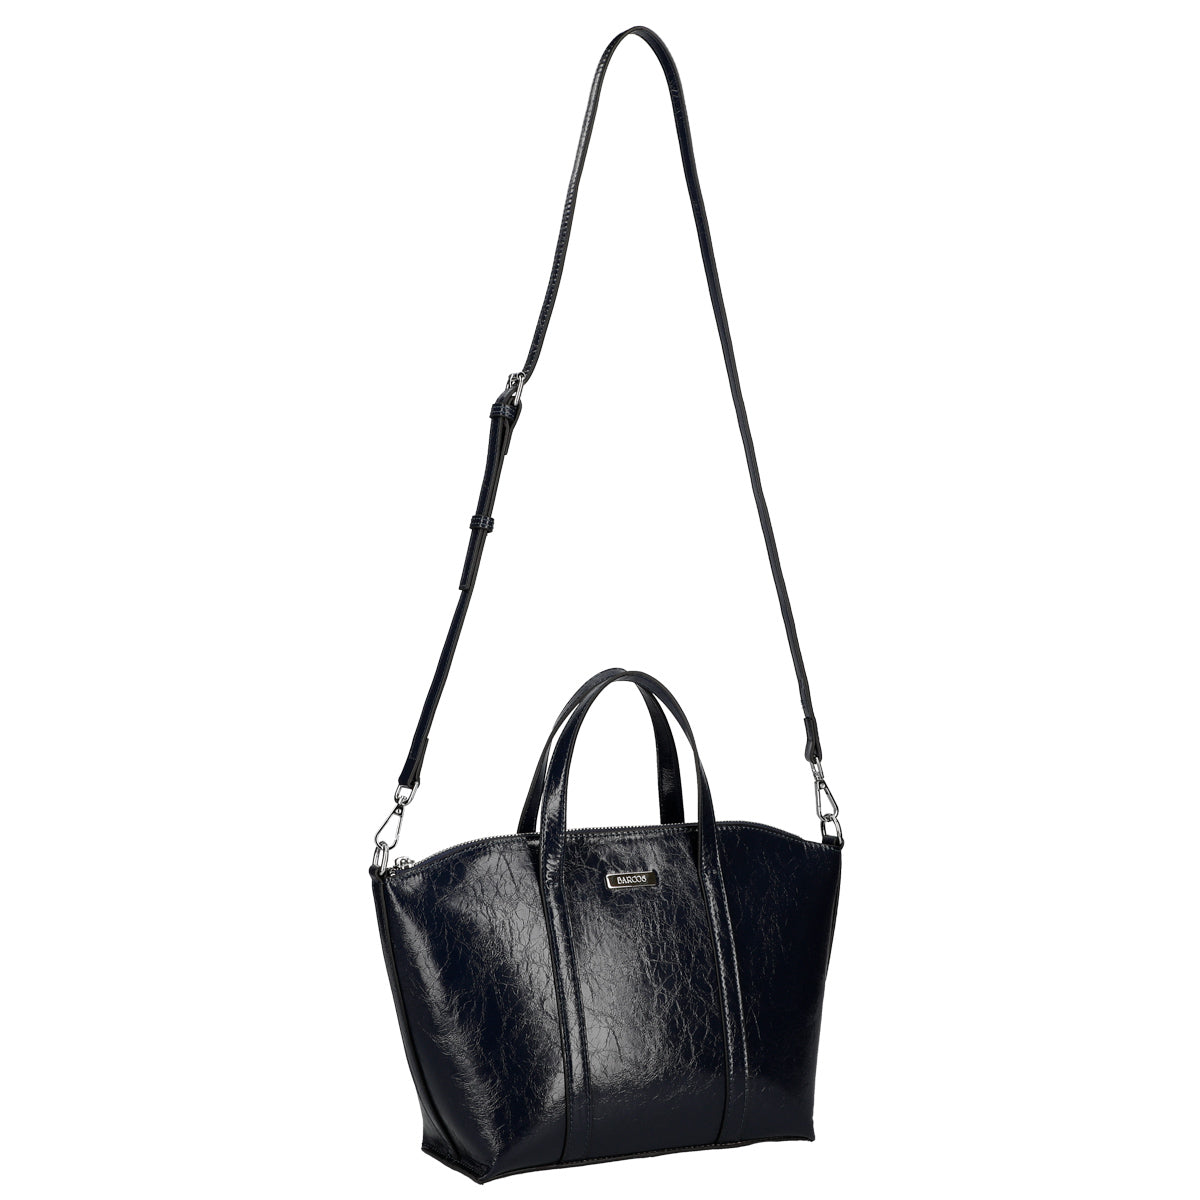 2 Way Leather Handbag with Shoulder Strap Attachment - Japanese Washi Paper Design